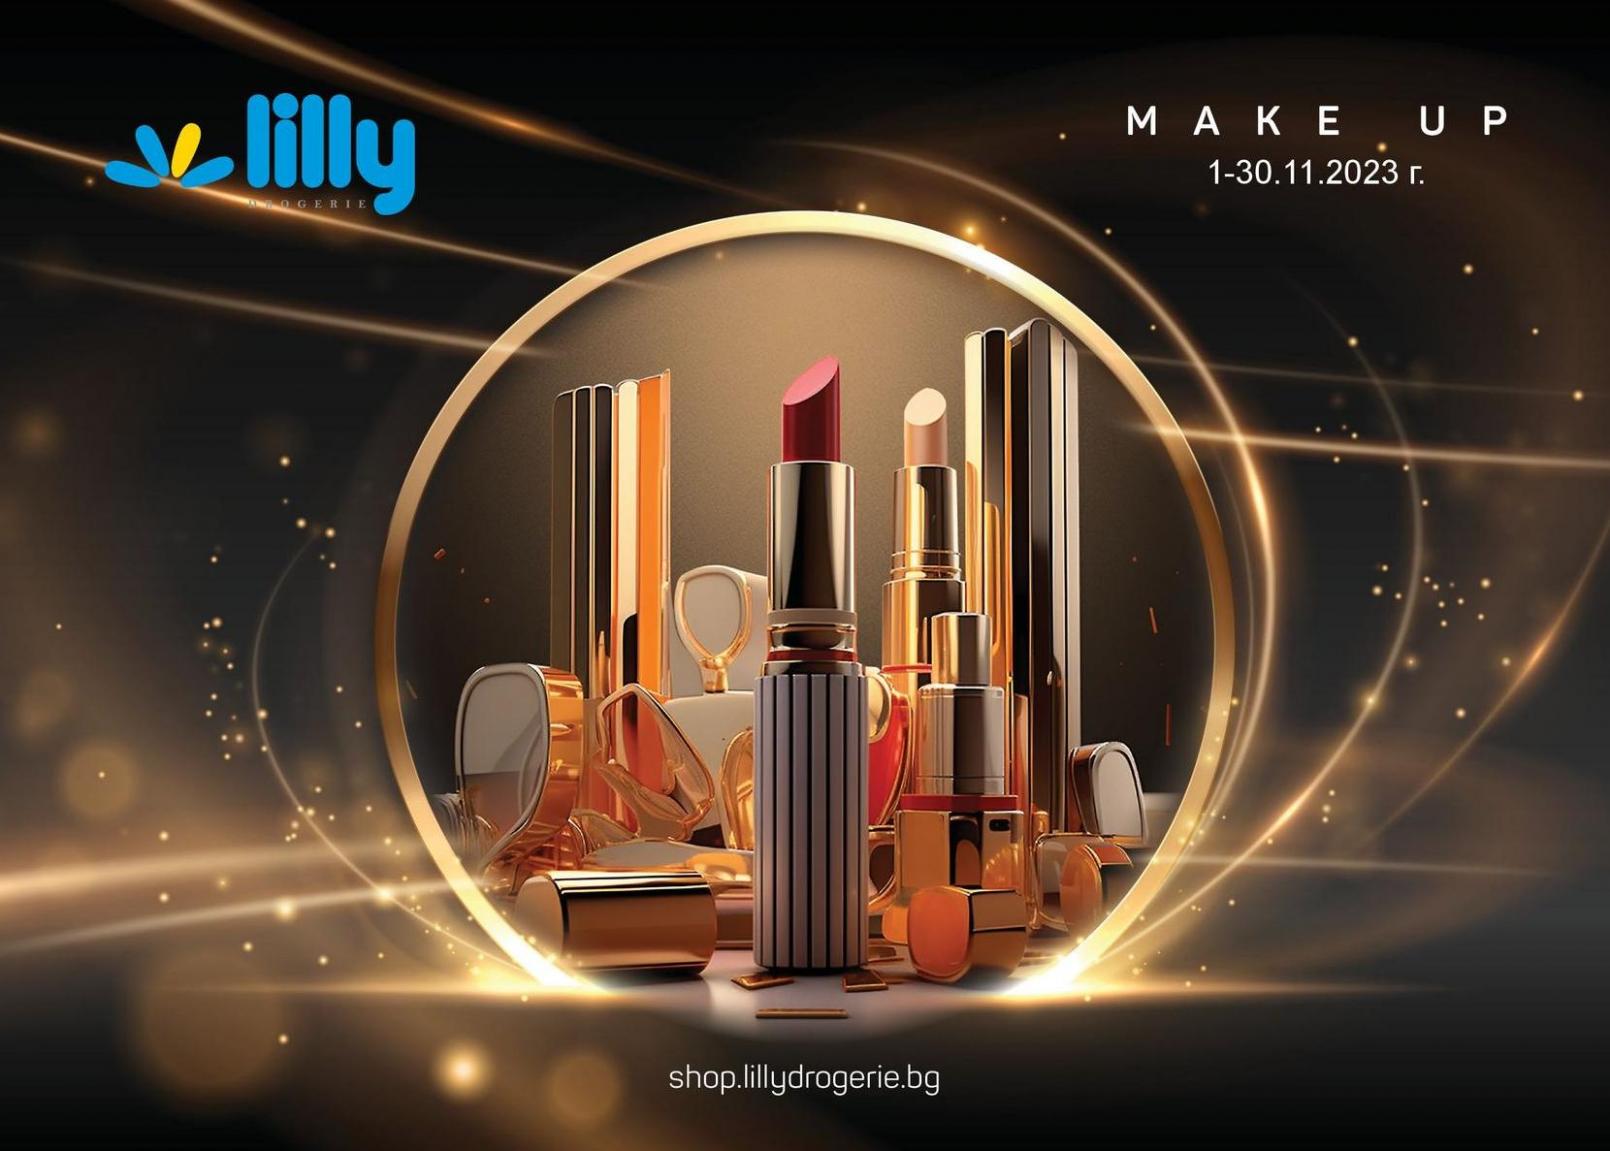 Make up 01-30.11.2023. Лили (2023-11-30-2023-11-30)